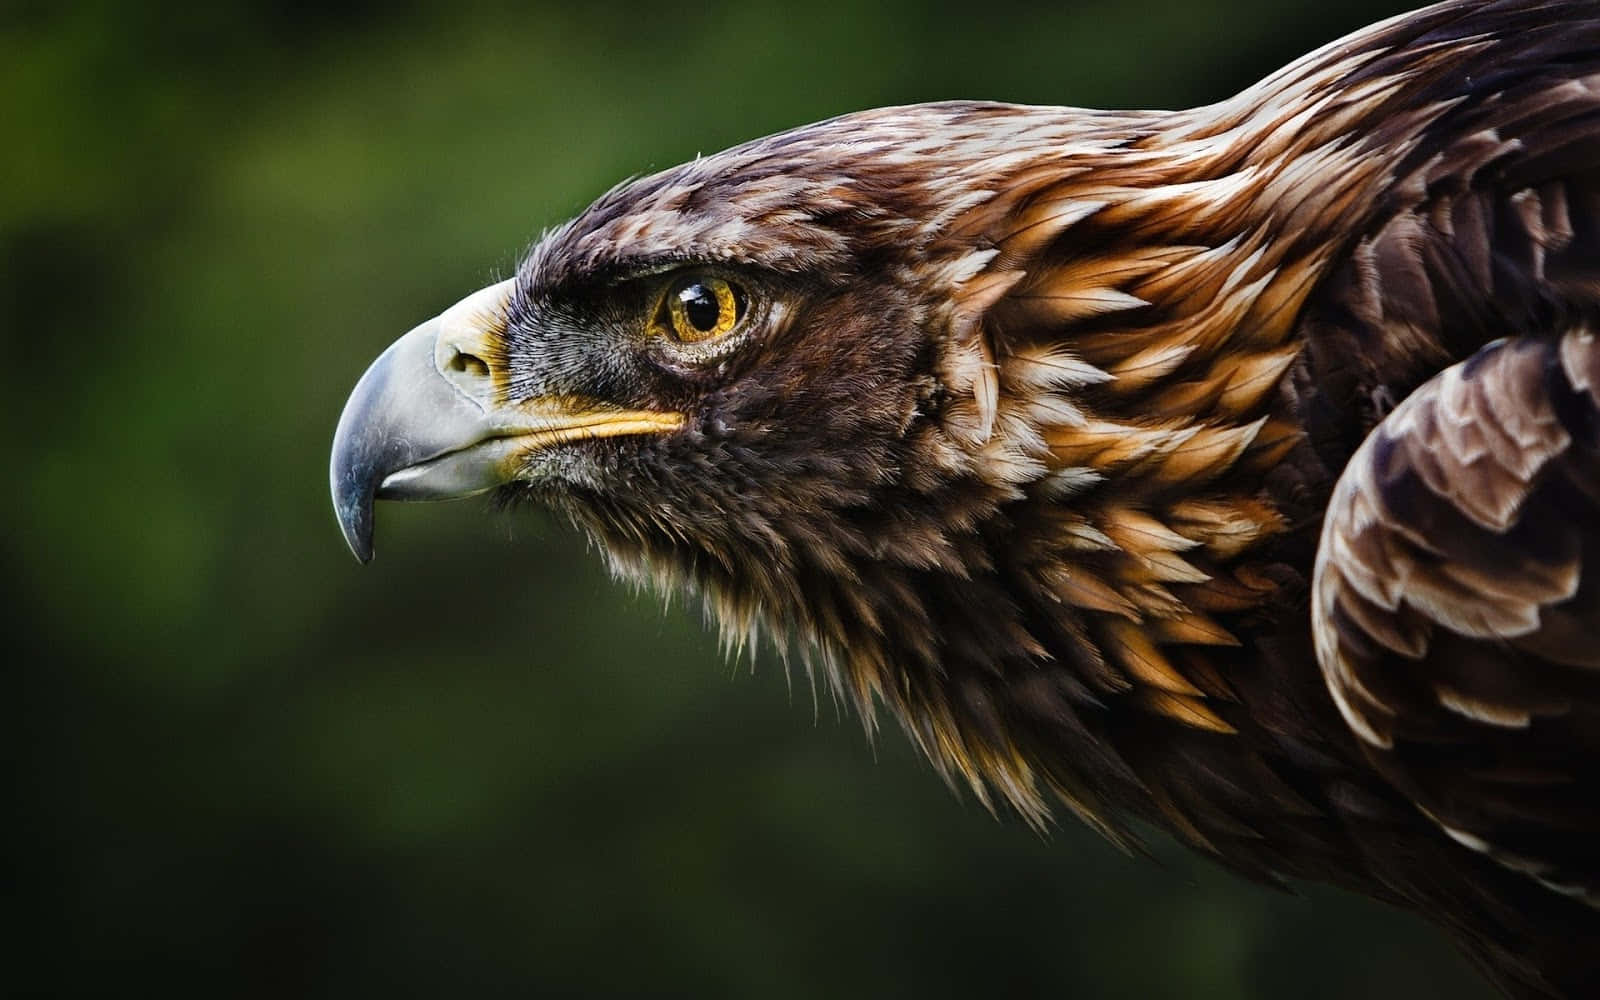 Power and beauty of a golden eagle soar in flight